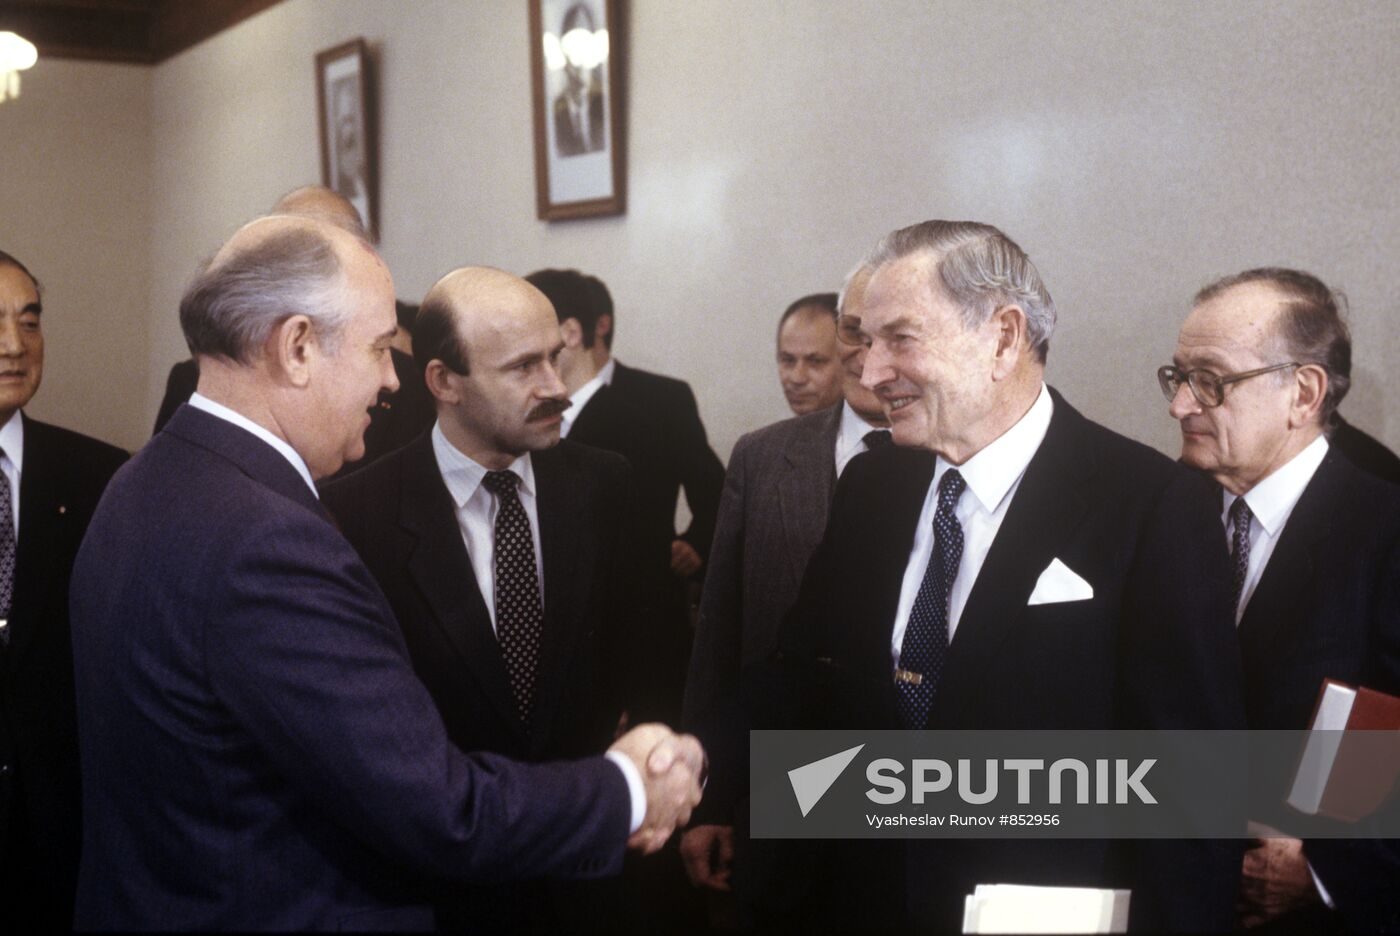 Mikhail Gorbachev and David Rockefeller